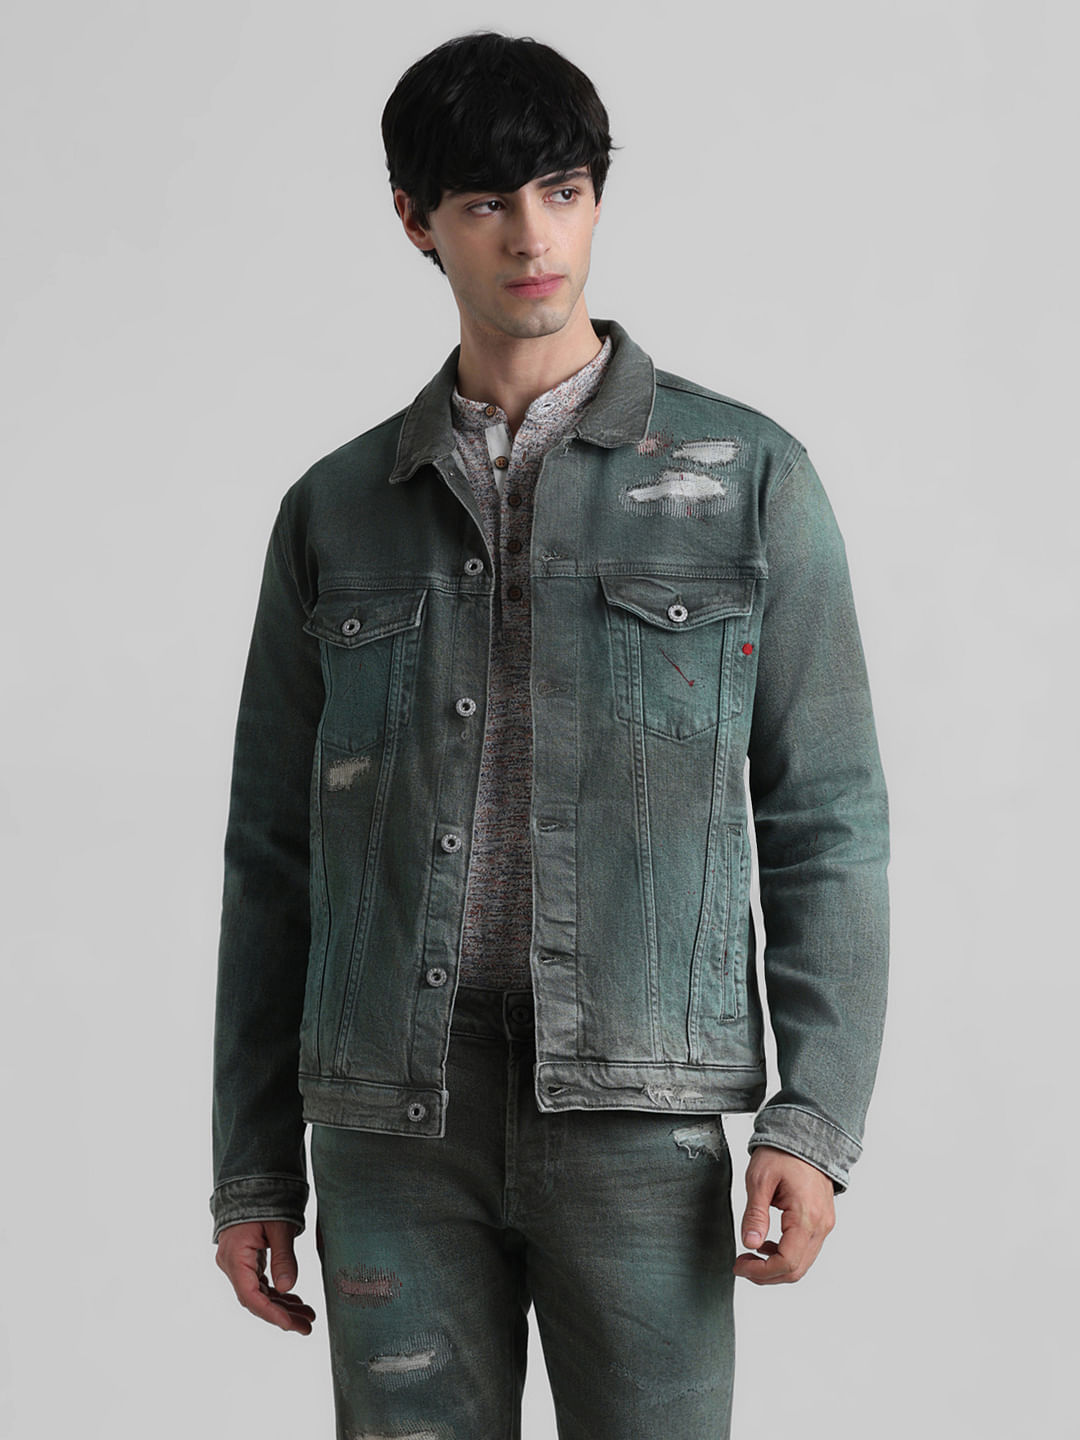 distressed jean jacket | Distressed denim jacket, Distressed jean jacket,  Denim fashion